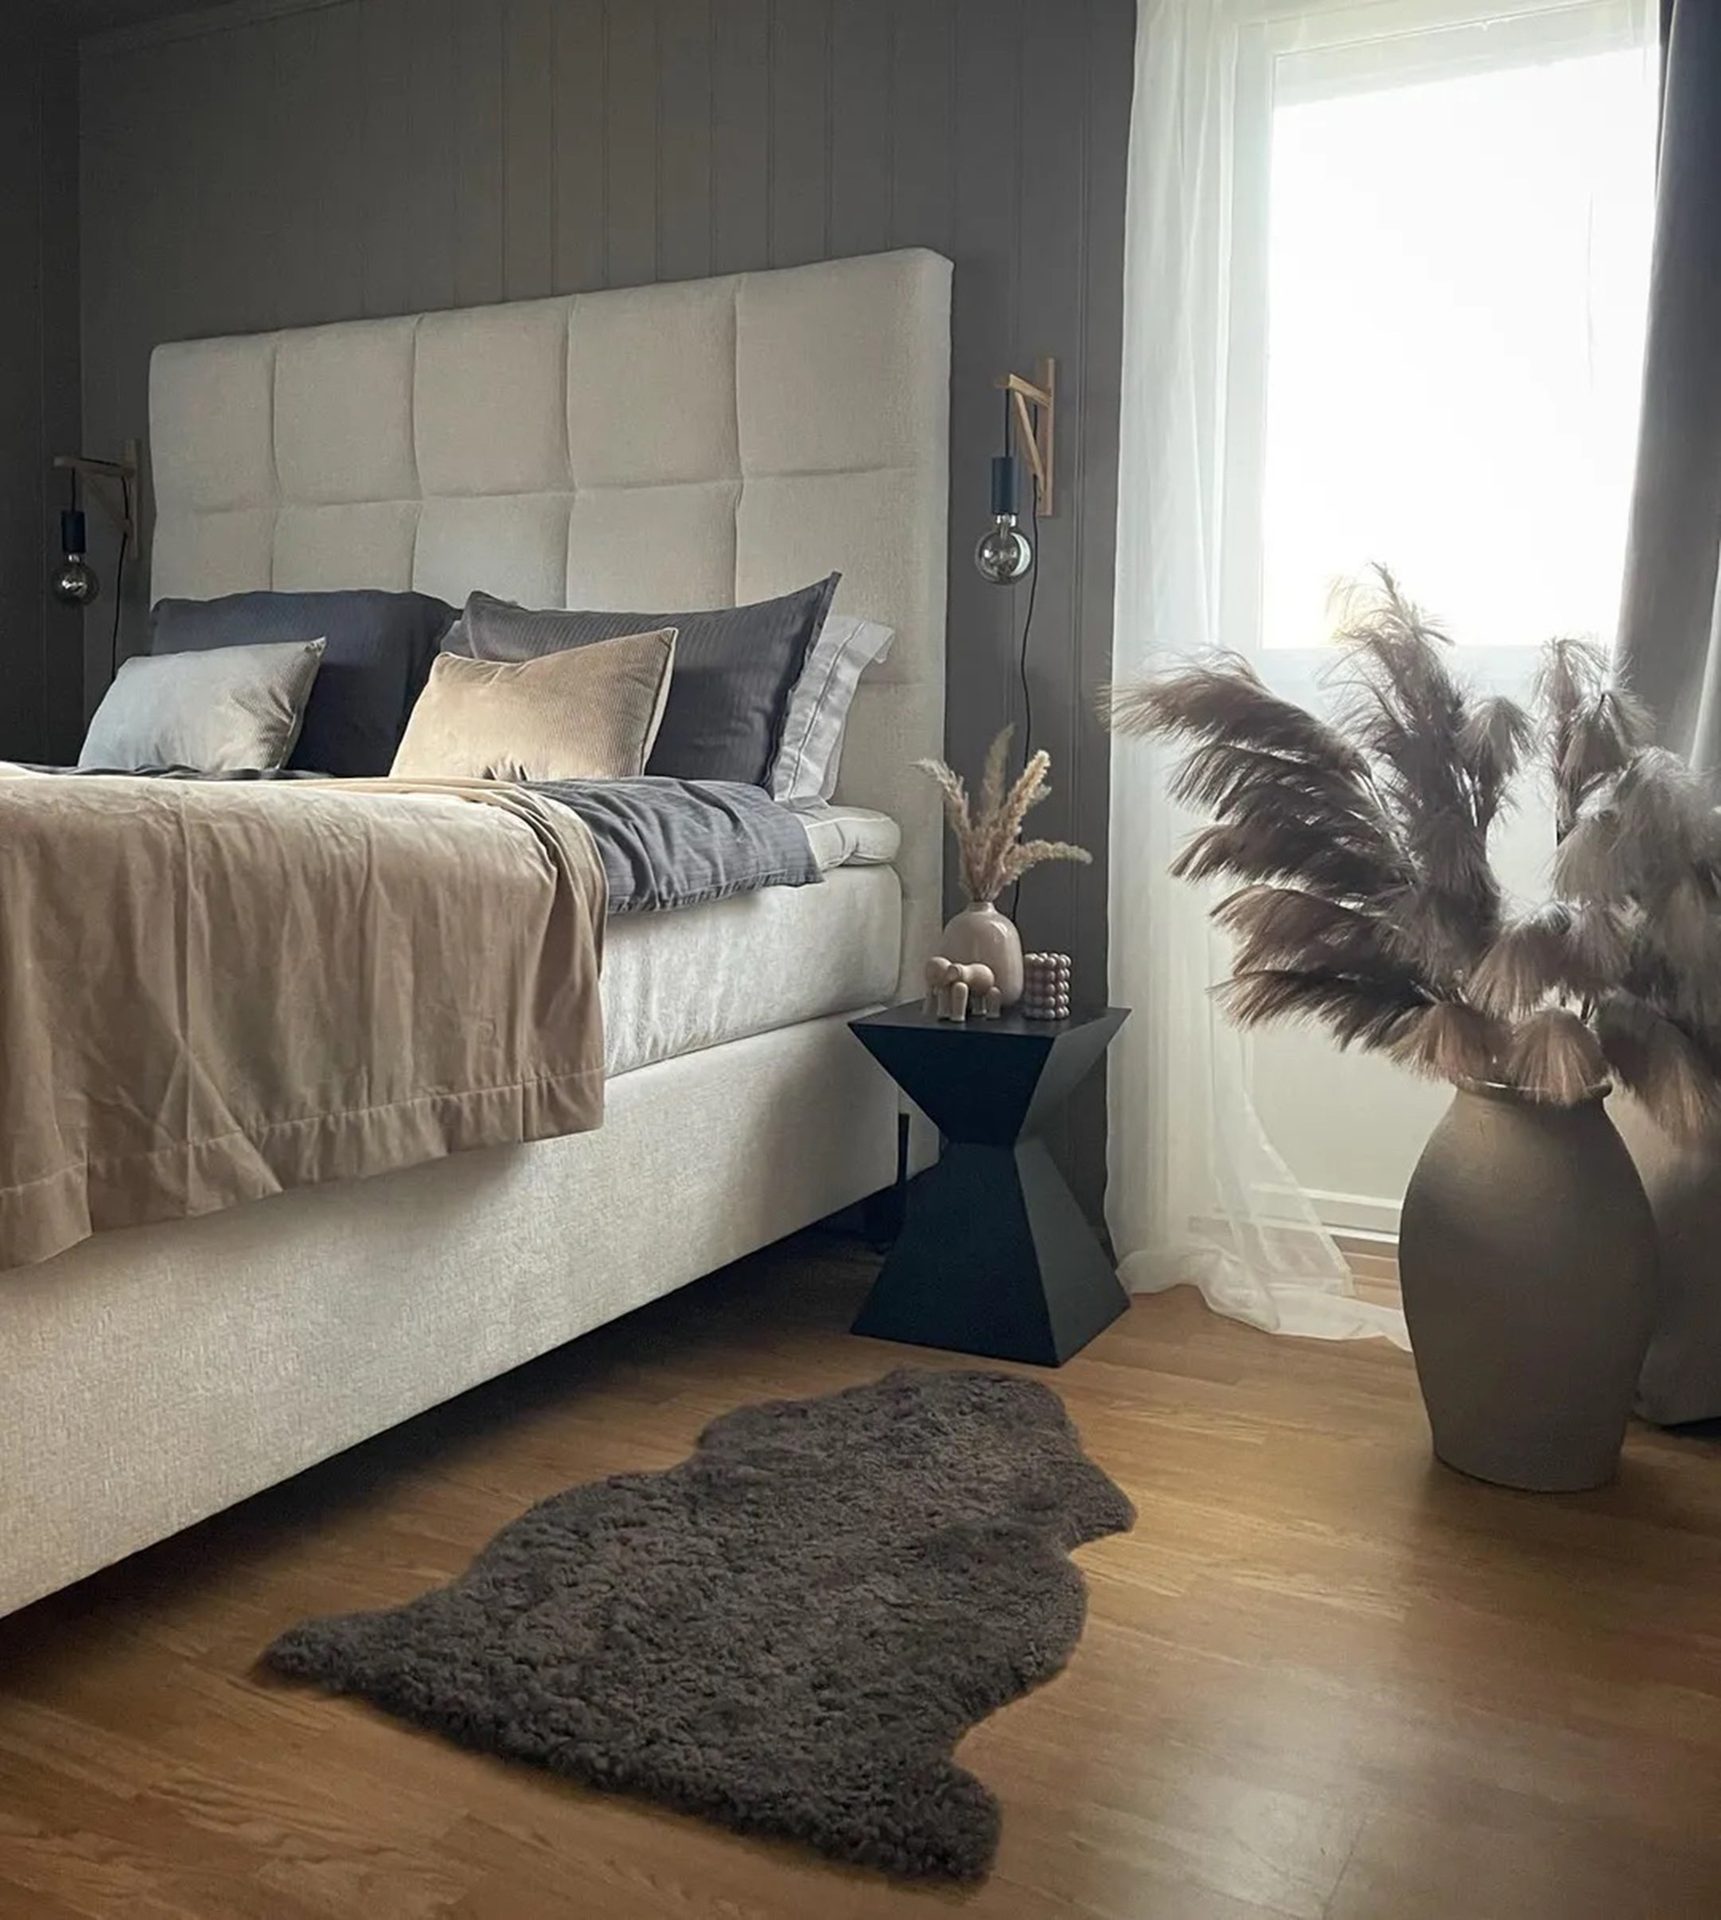 Interior design, Bed frame, Comfort, Wood, Lamp, Lighting, Shade, Grey, Floor, Pillow